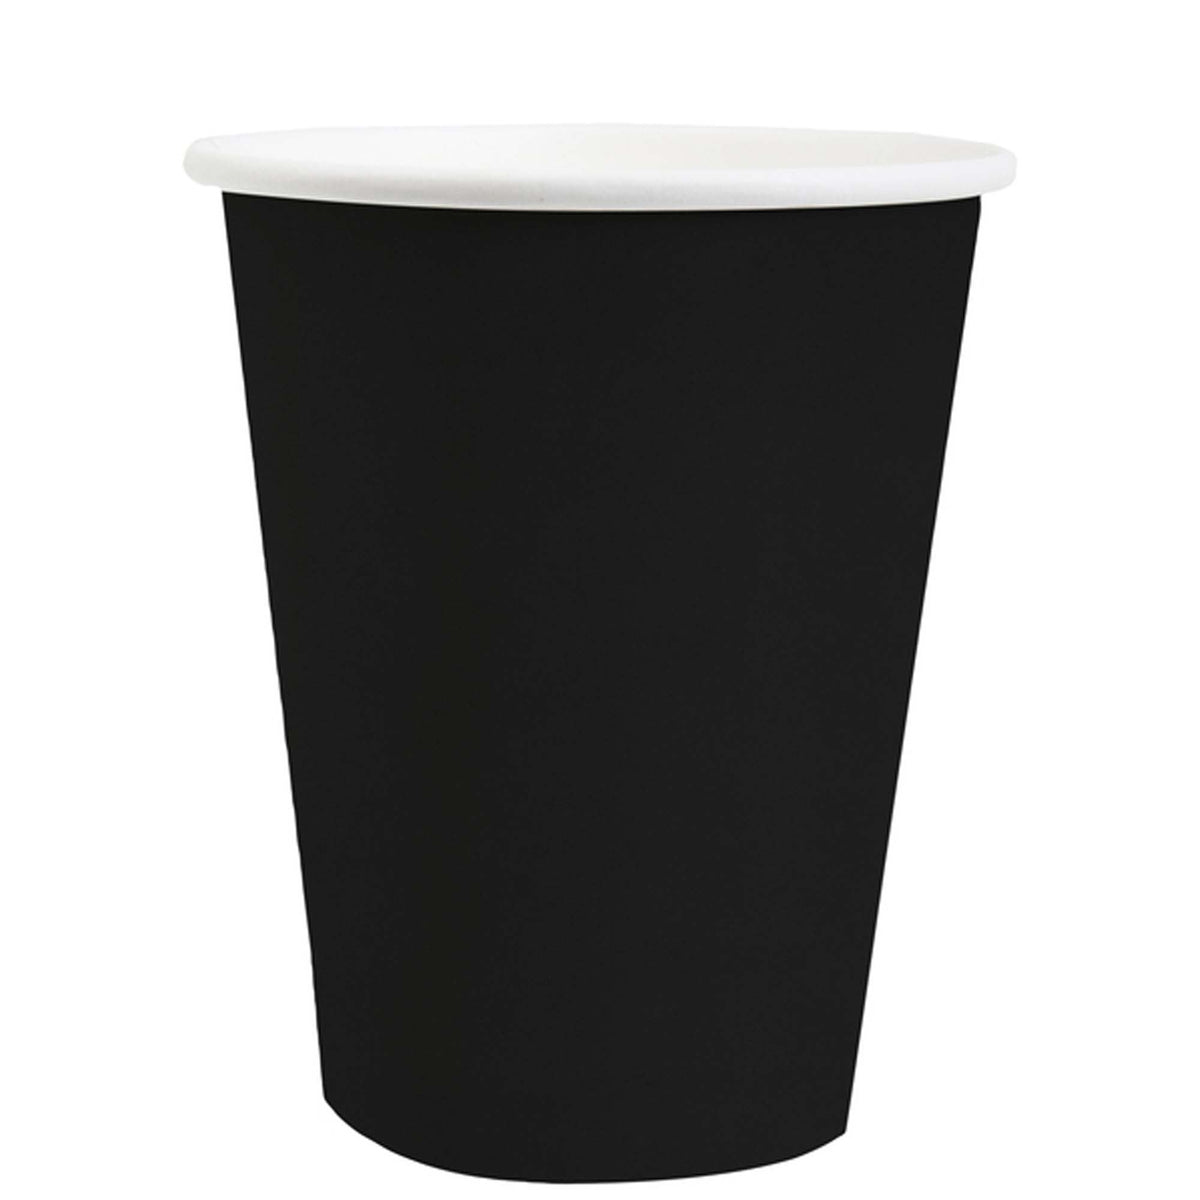 SANTEX Everyday Entertaining Black Party Paper Cups, 9 Oz, 10 Count 3660380072911